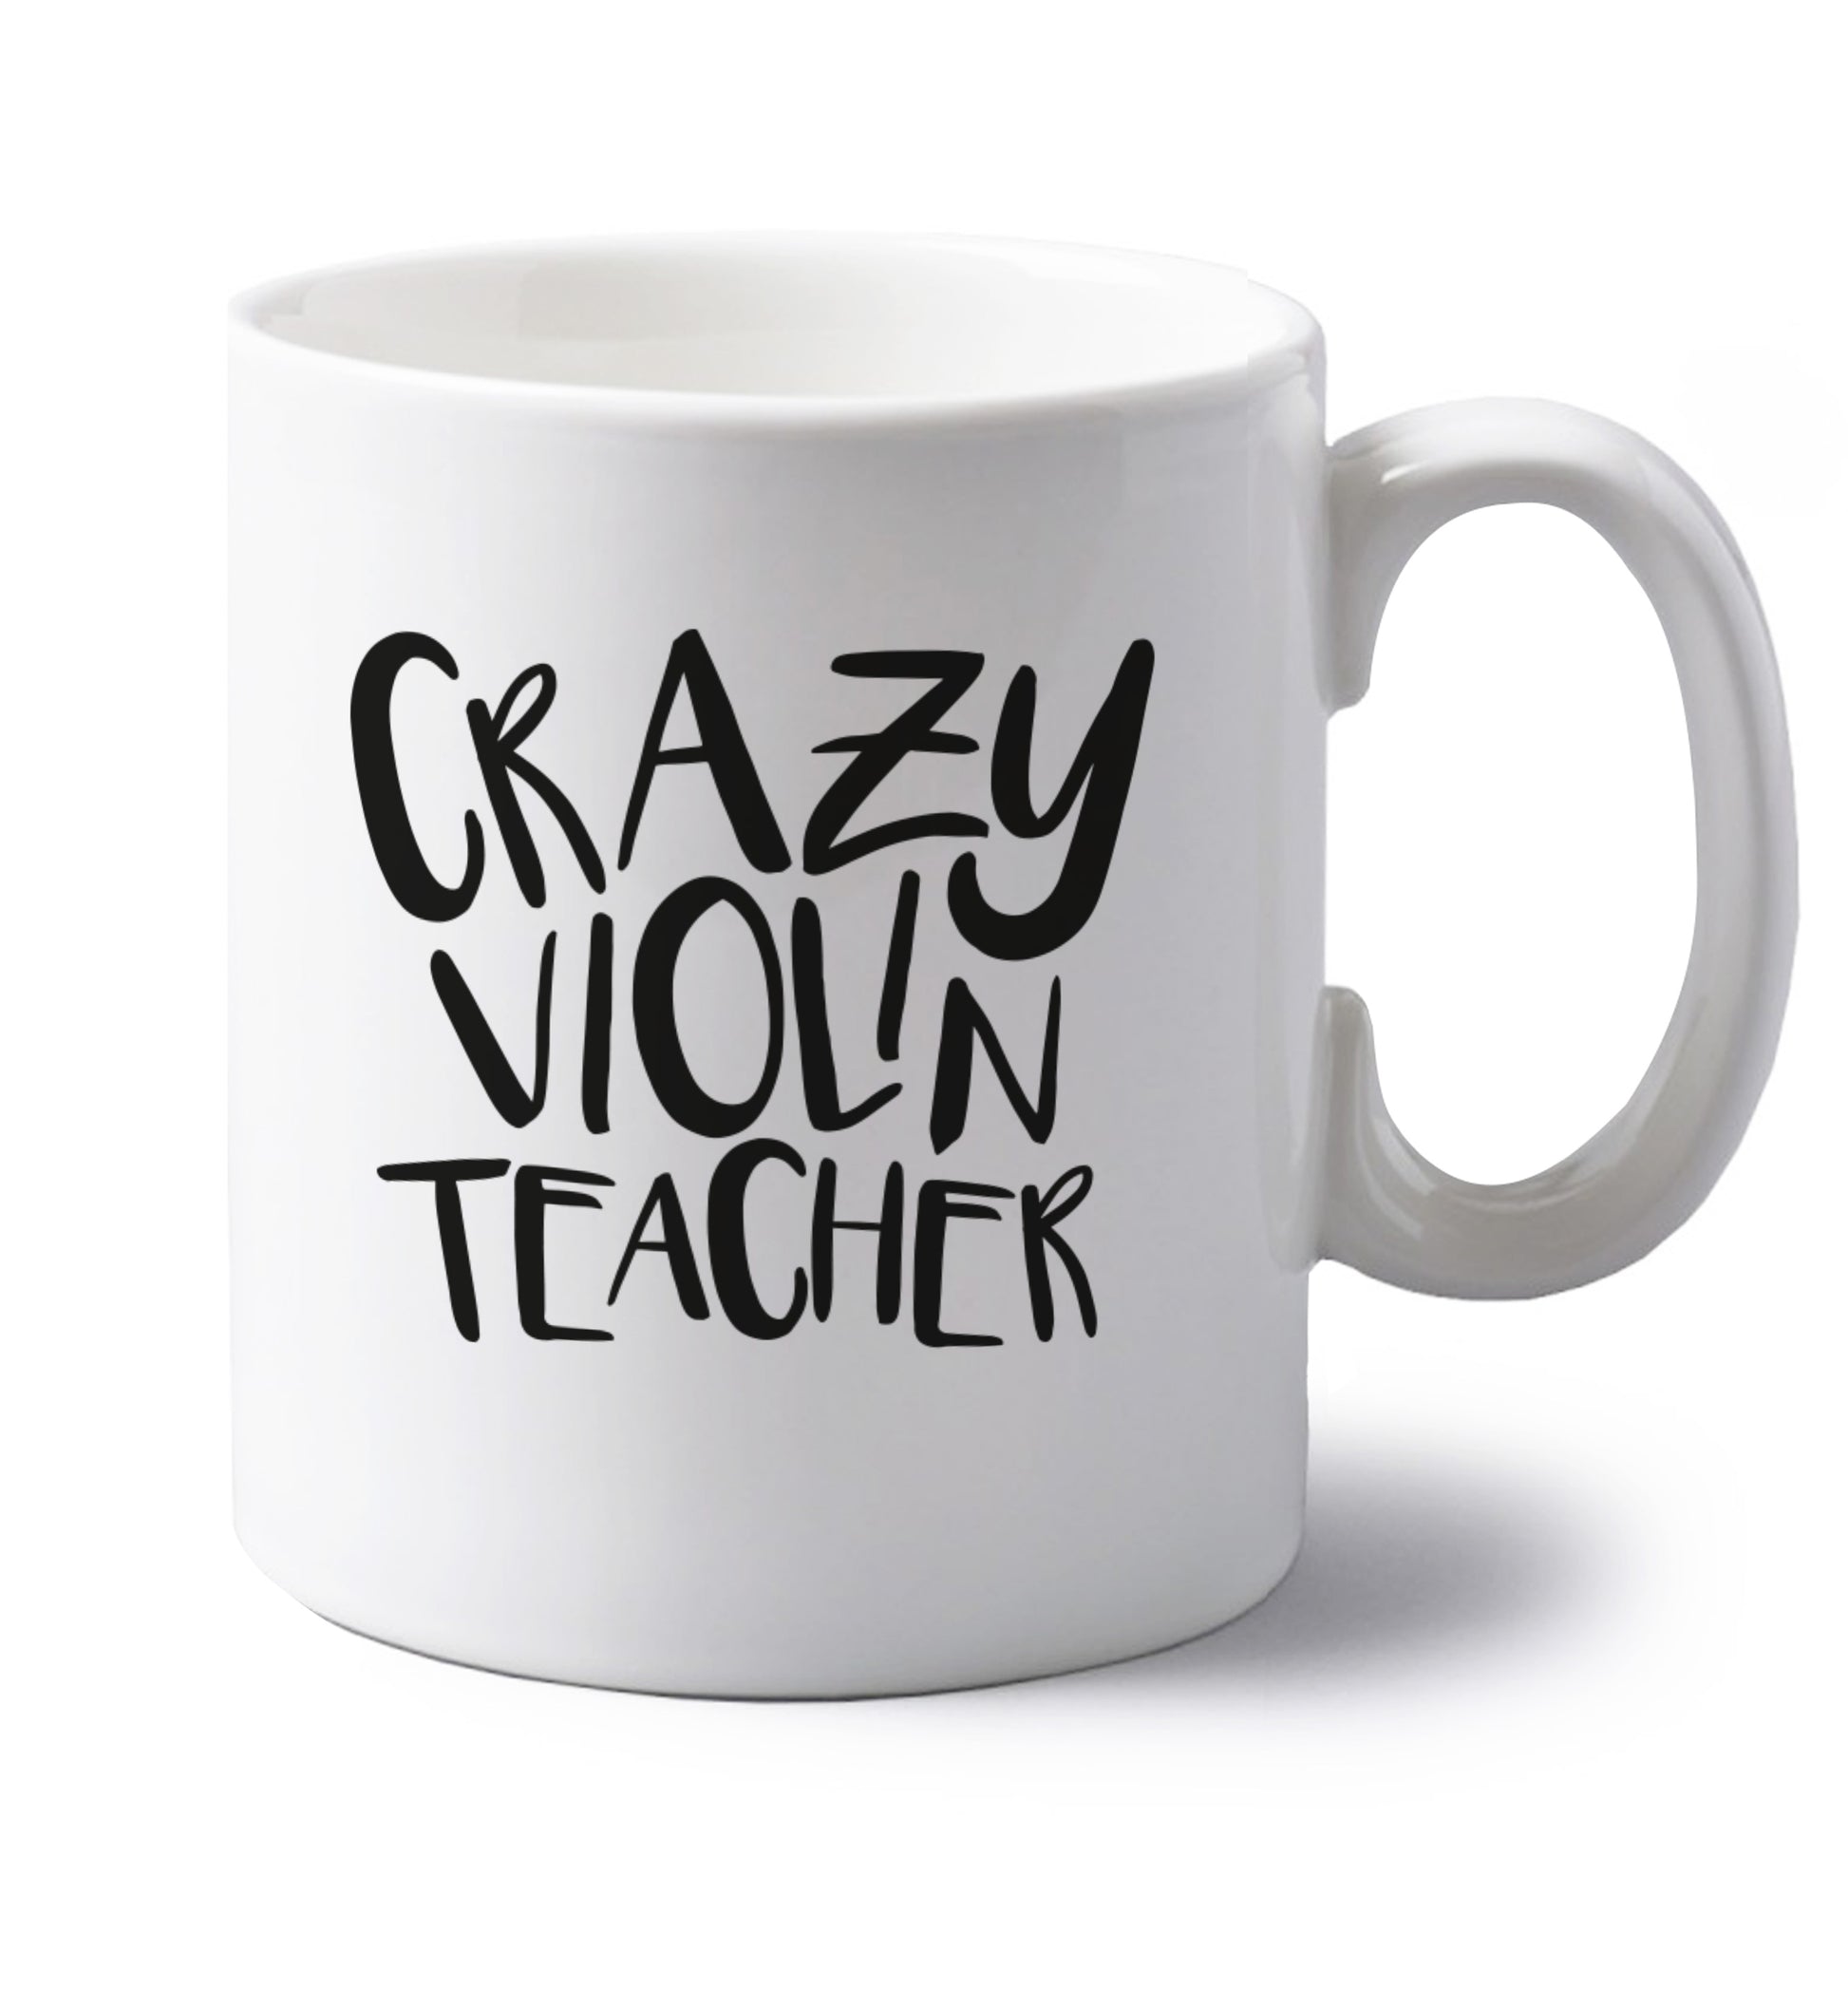 Crazy violin teacher left handed white ceramic mug 